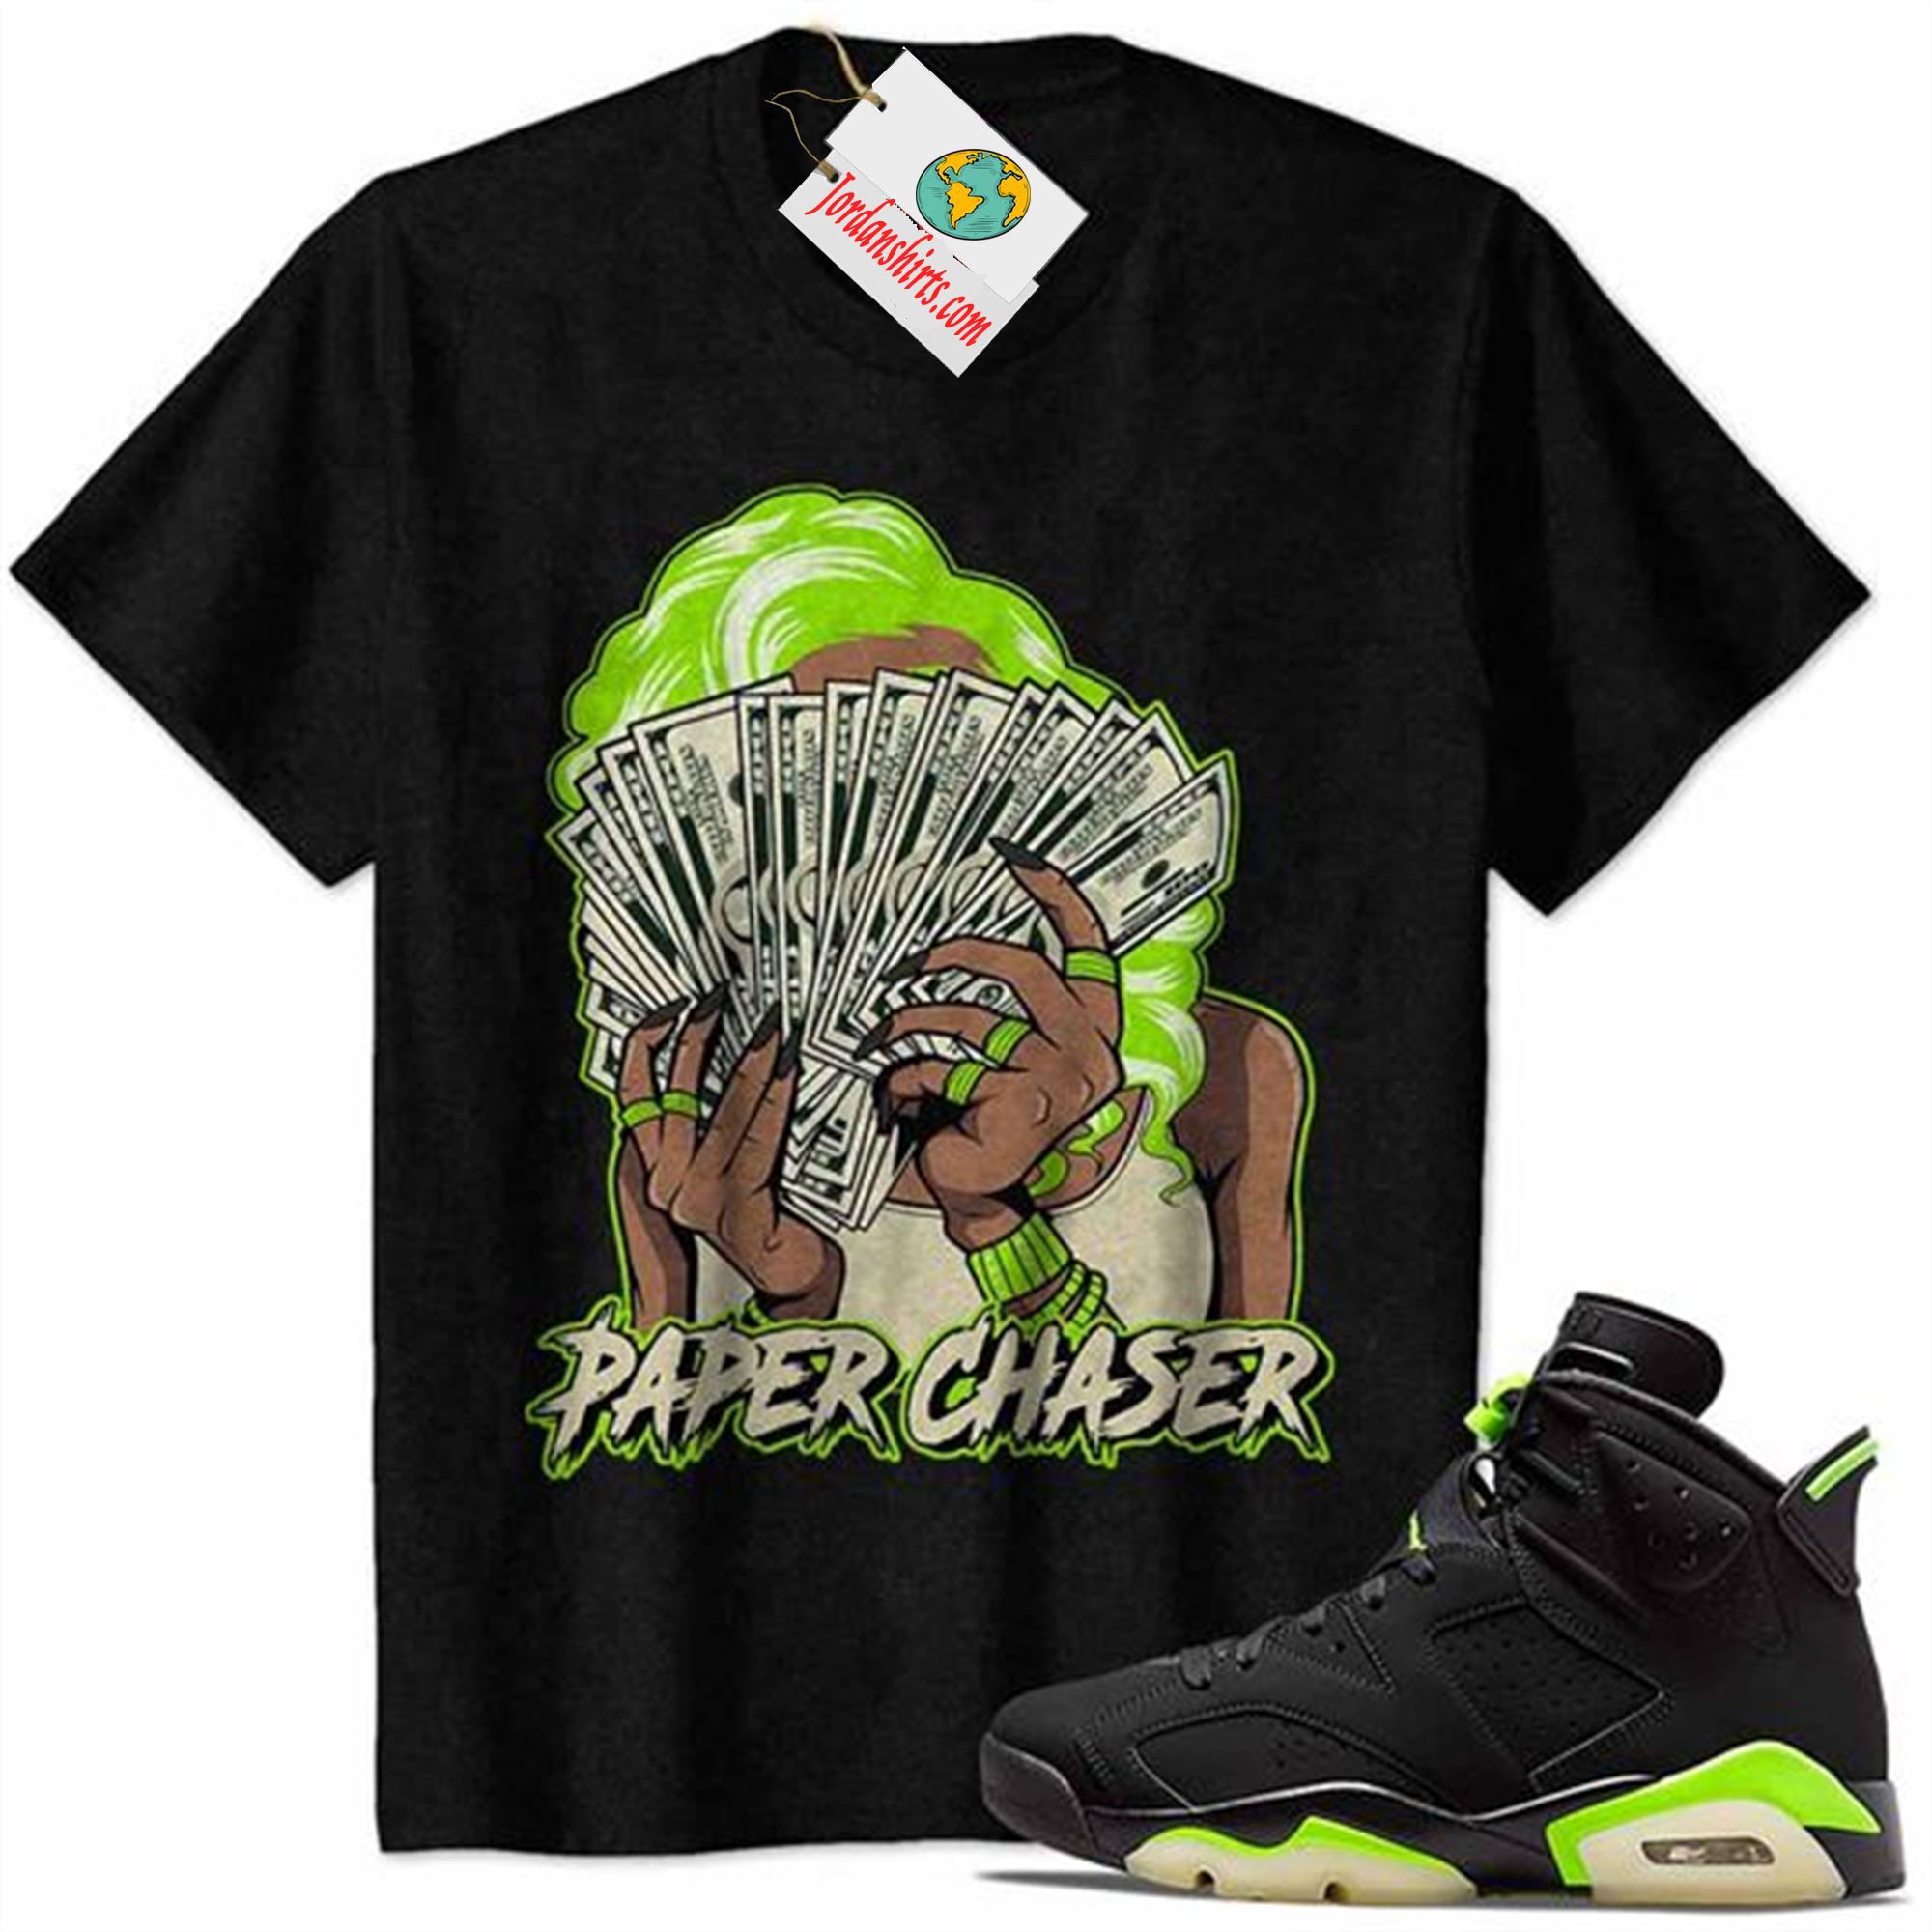 Jordan 6 Shirt, Paper Chaser Business Woman Money Fan Spread Black Air Jordan 6 Electric Green 6s Full Size Up To 5xl